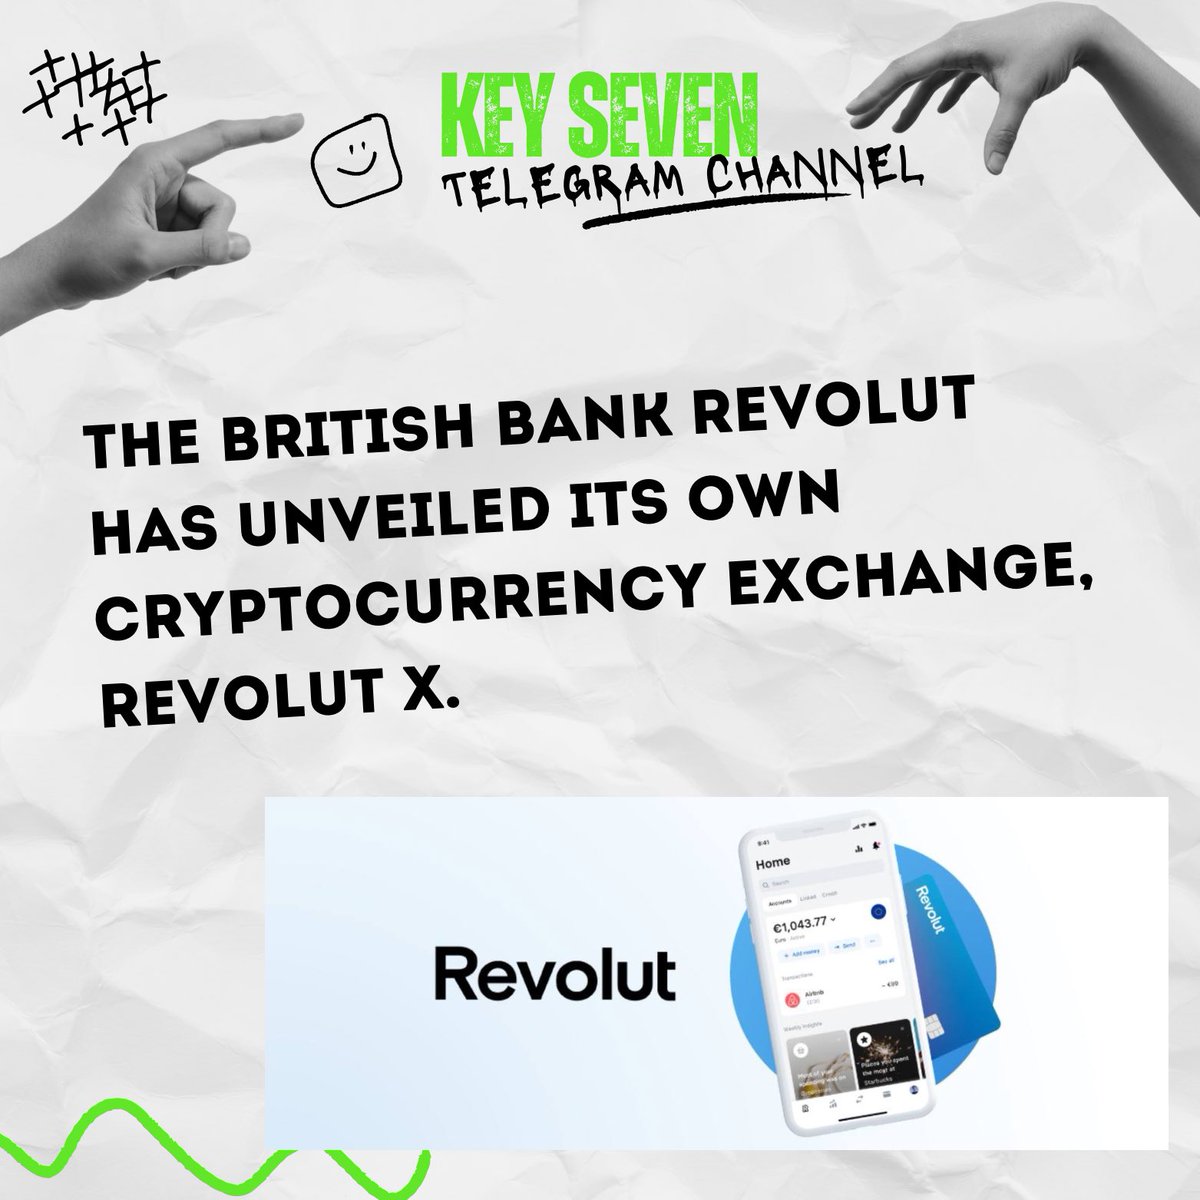 The British bank @RevolutApp has unveiled its own cryptocurrency exchange, Revolut X

✅ t.me/key7it/43

#News #CryptoNews #cryptonew #Crypto #cryptocurrencies #blockchain #BlockchainNews #KeySevenChannel